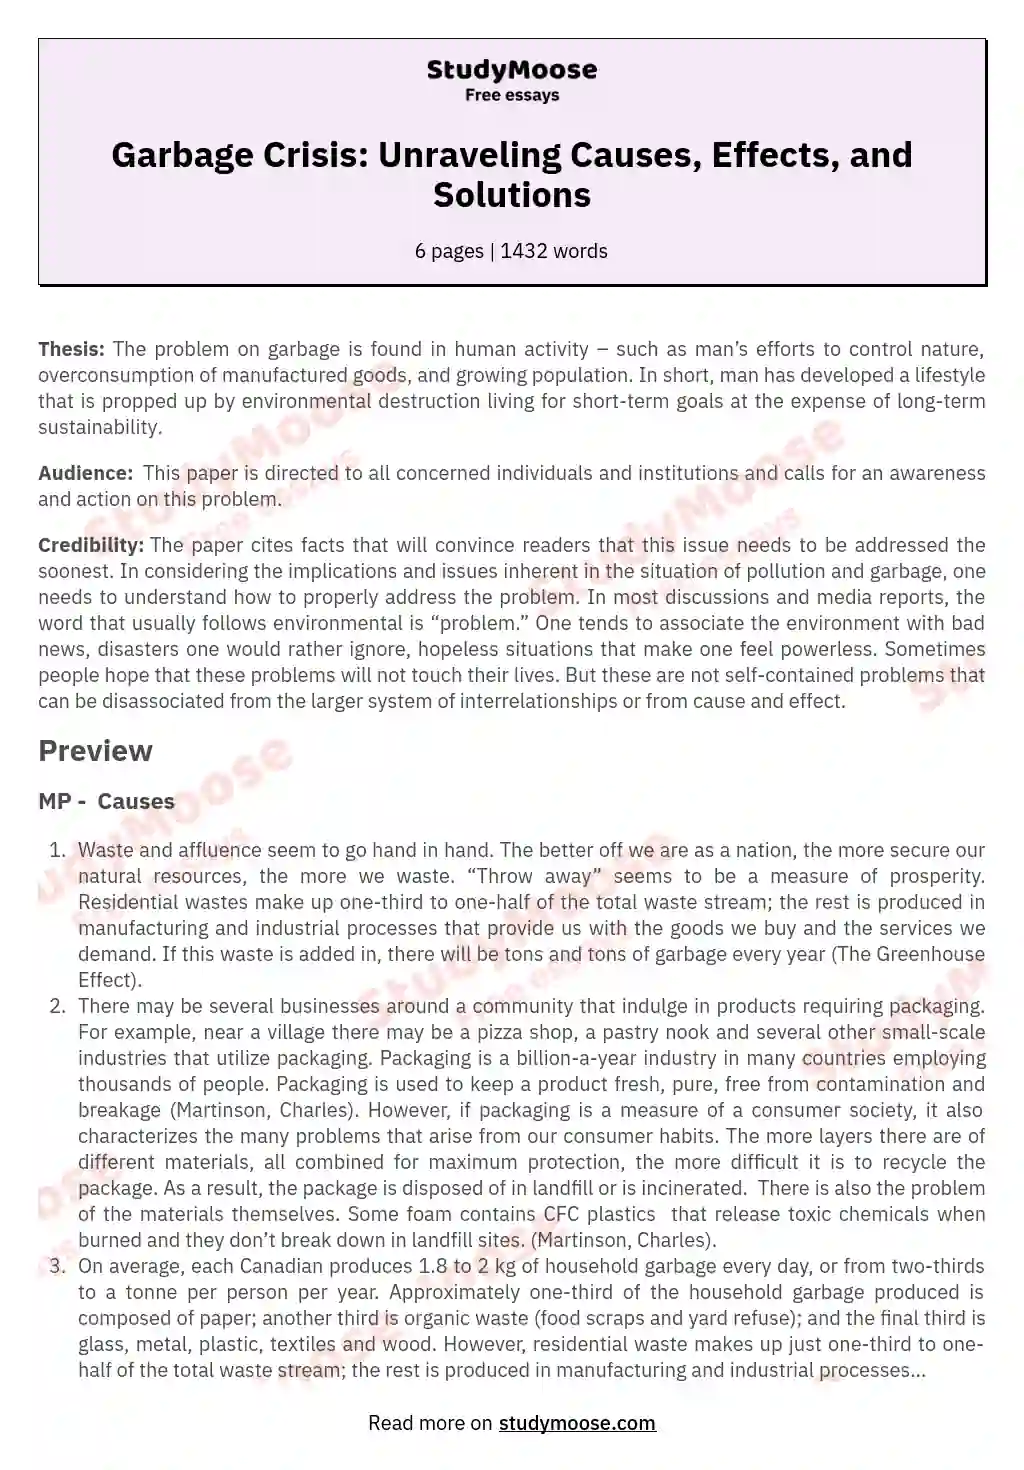 garbage free india essay pdf